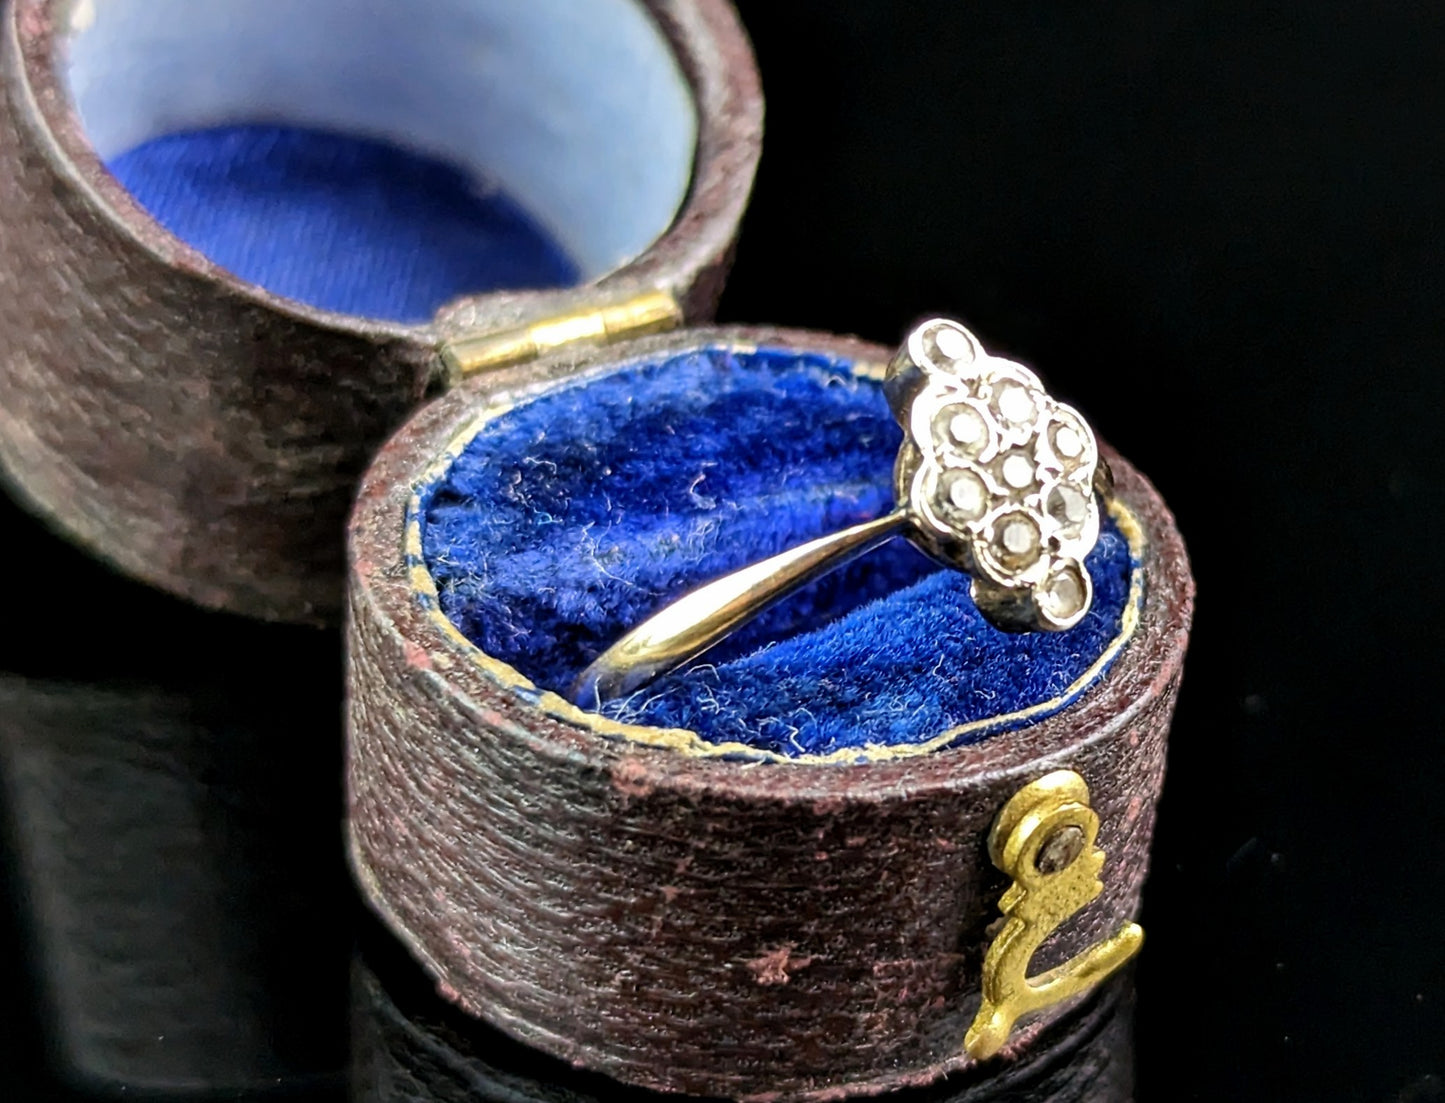 Vintage Art Deco paste navette ring, 9ct gold